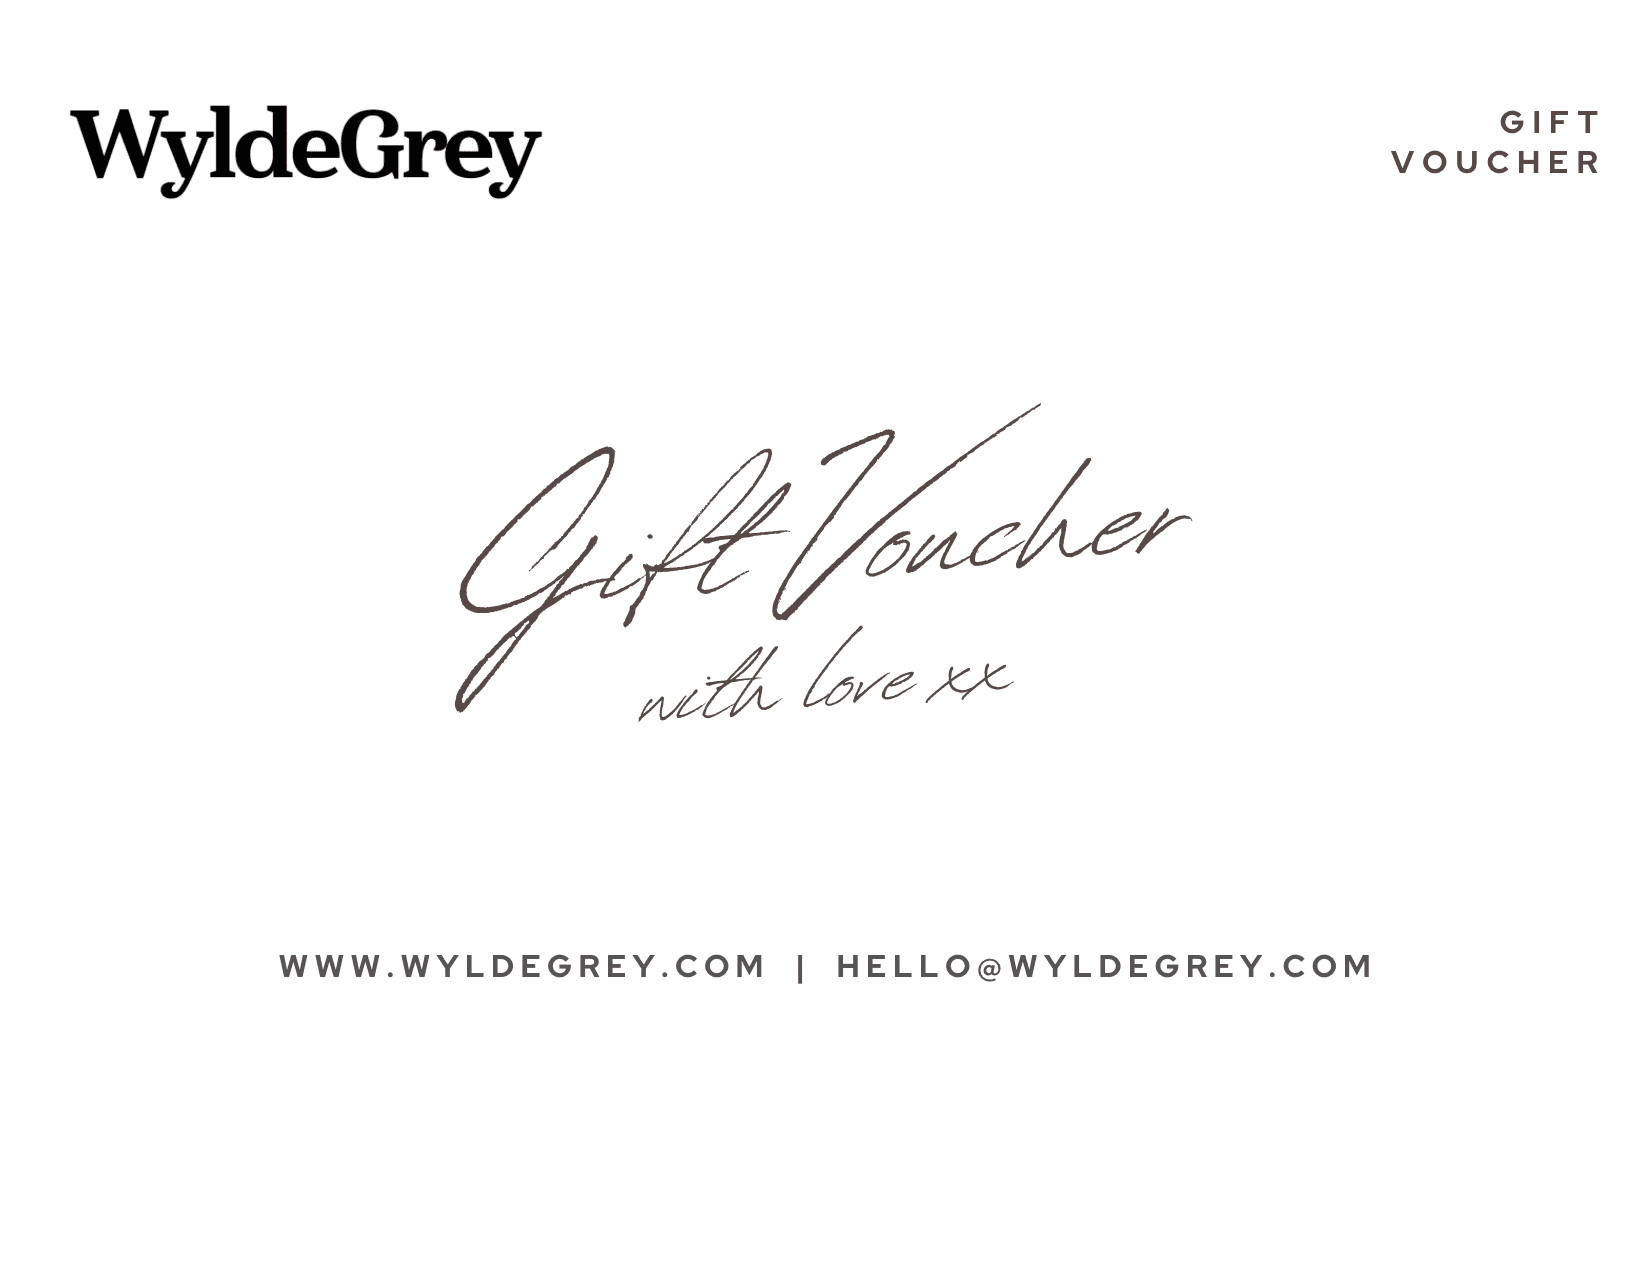 Wylde Grey Gift Voucher - Wylde Grey